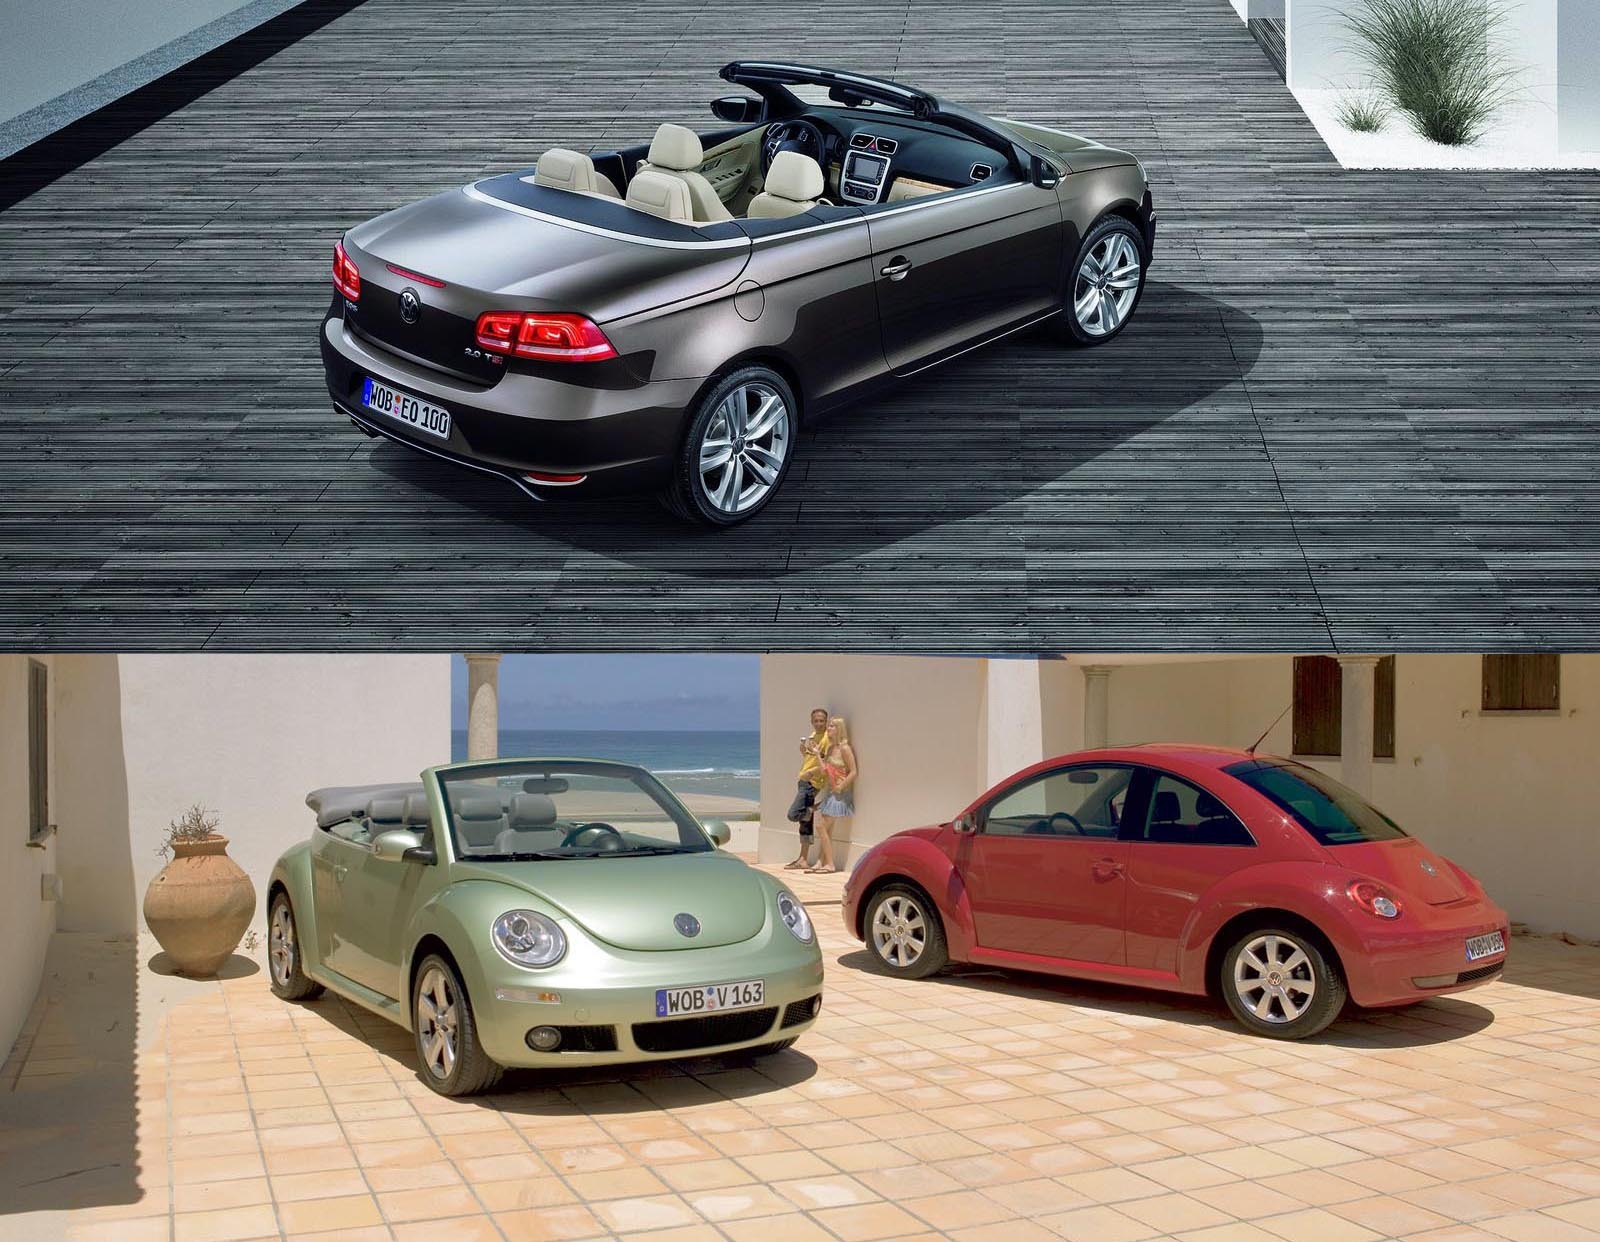 Volkswagen are doua modele decapotabile in gama: Eos - modern, Beetle Convertible - neo-retro